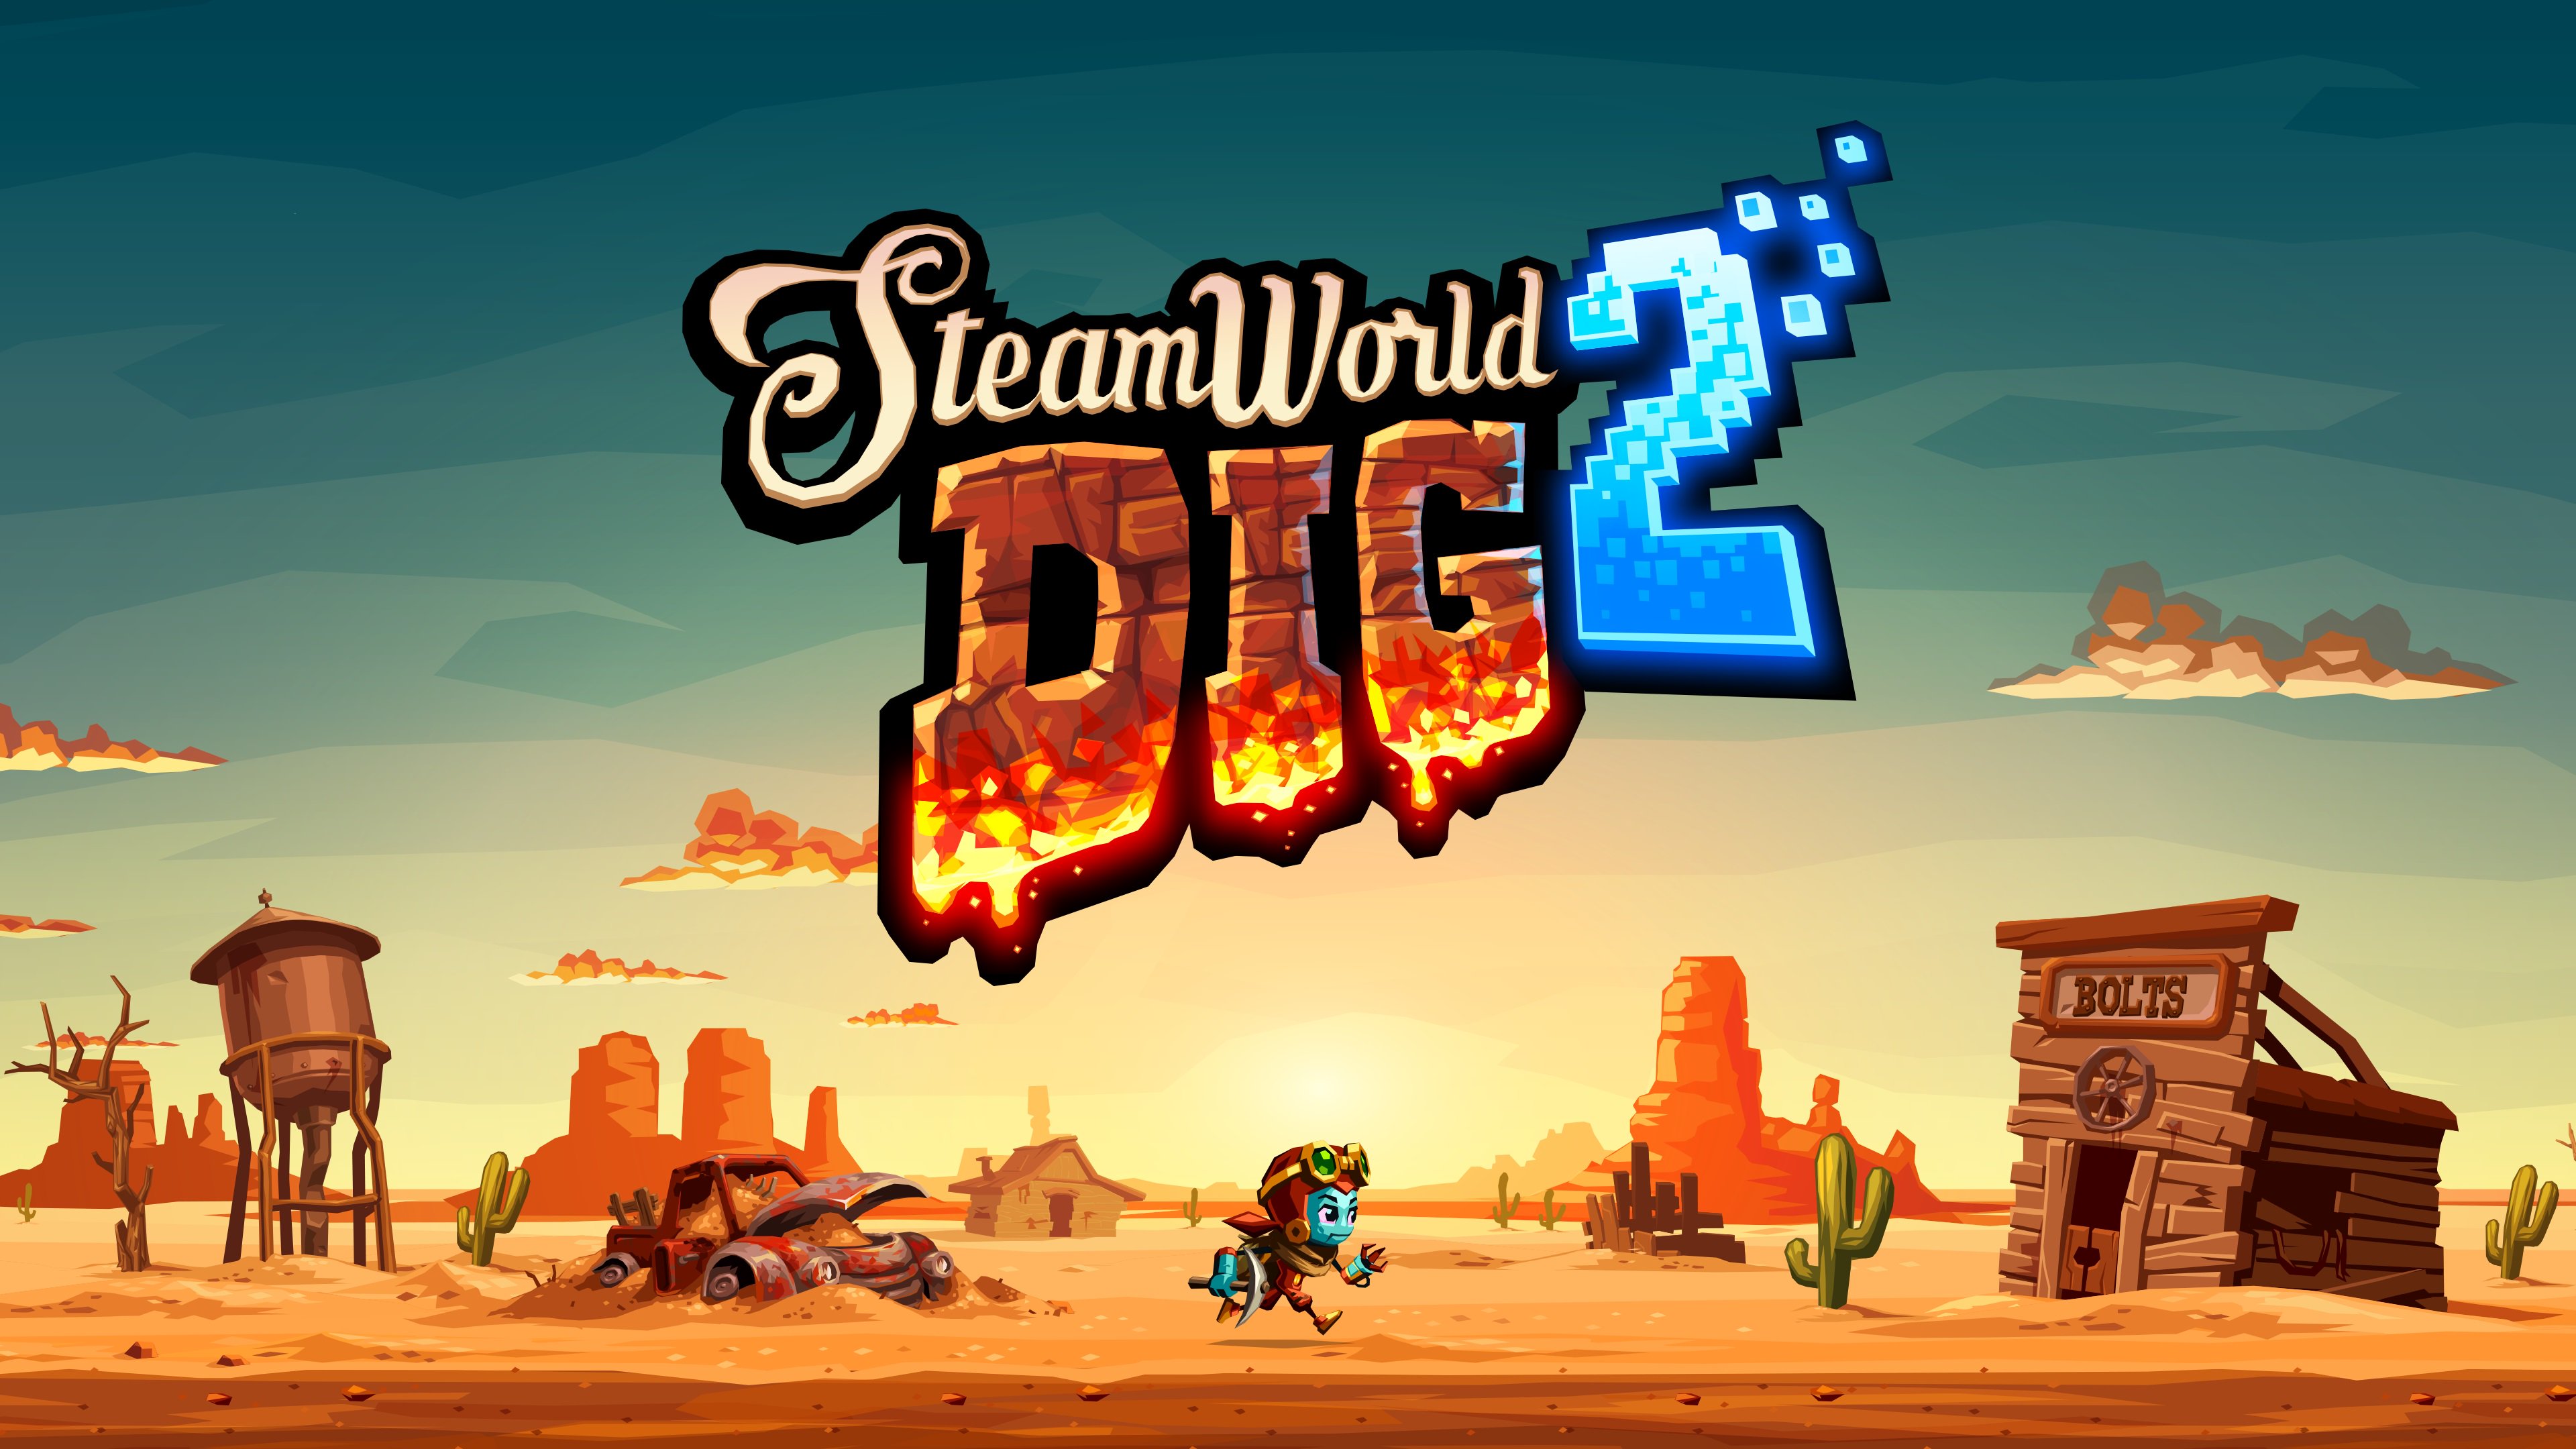 HD desktop wallpaper of SteamWorld Dig 2 featuring game logo and character in a desert landscape.